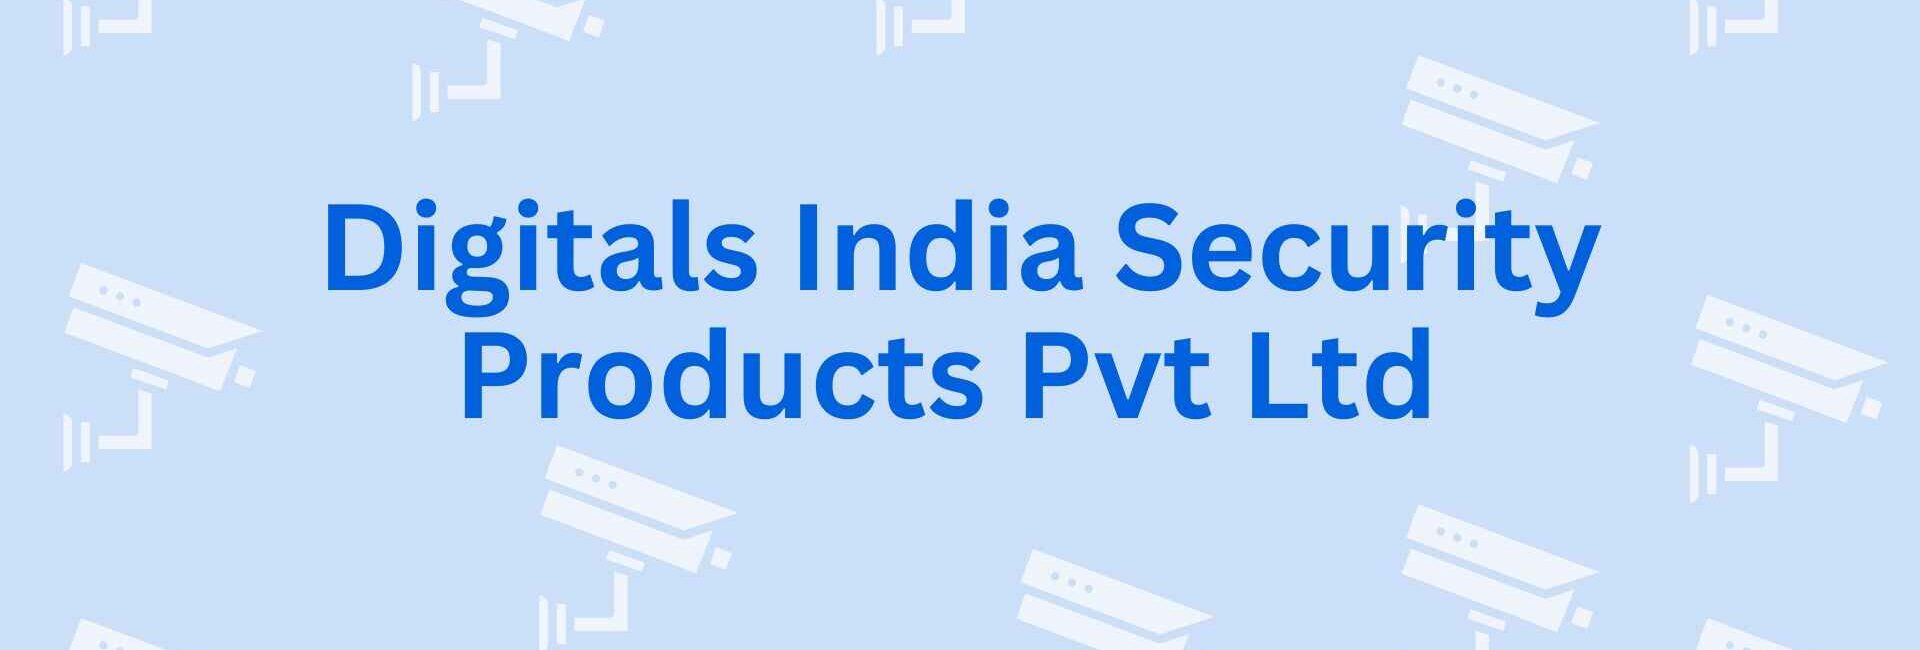 Digitals India Security Products Pvt Ltd - Best CCTV Dealer in Noida